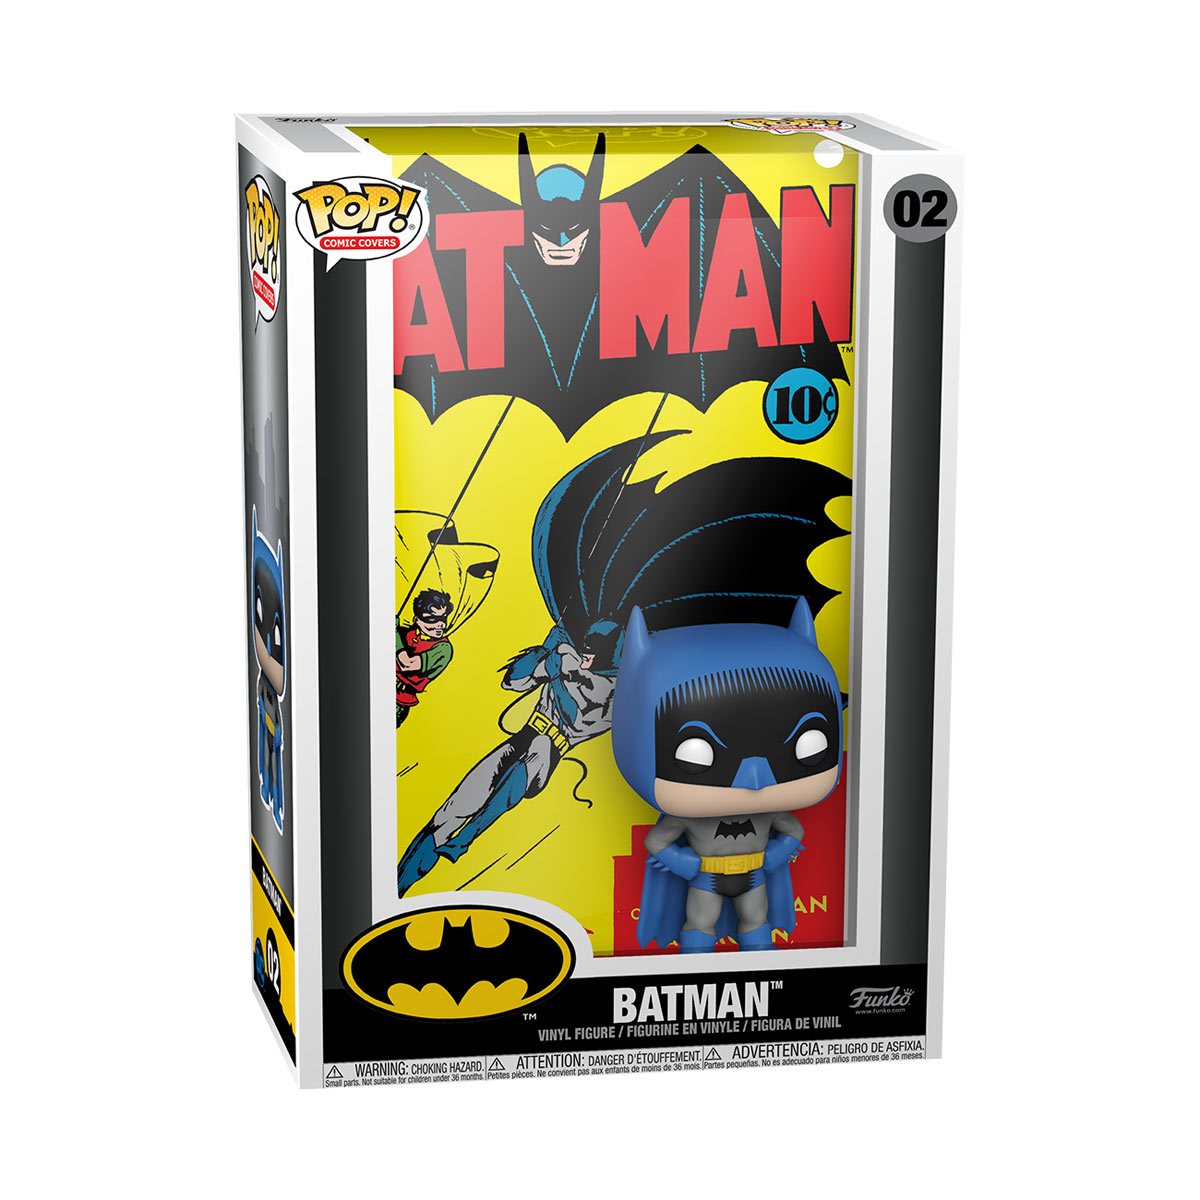 Batman #1 Pop! Comic Cover Figure #02